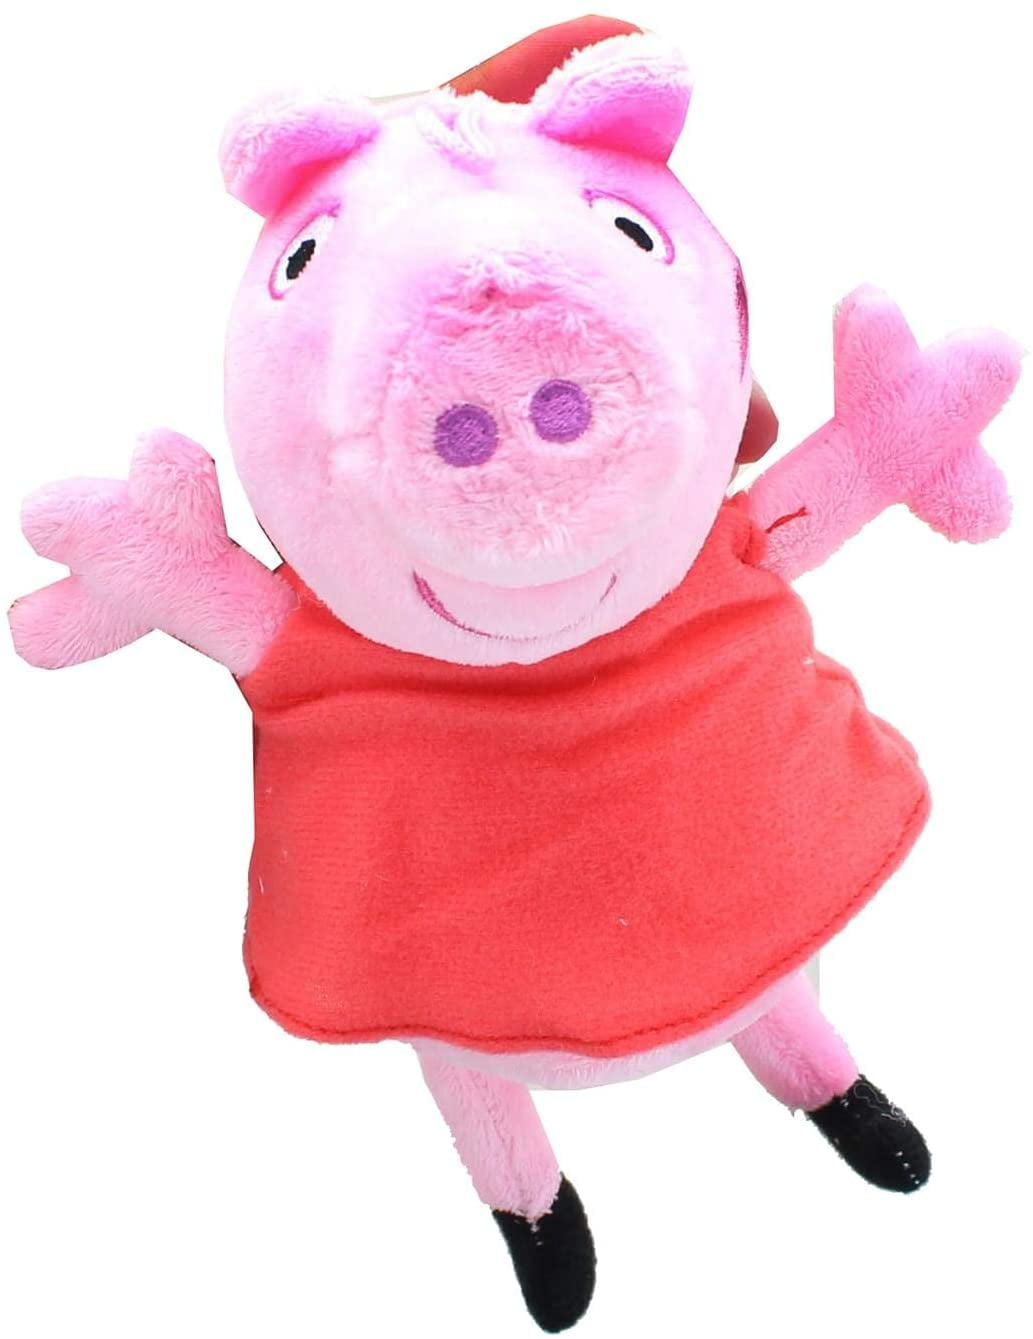 Peppa Pig Plush Kids Chair 8th Wonder Bedroom Playroom Cuddle Story NEW